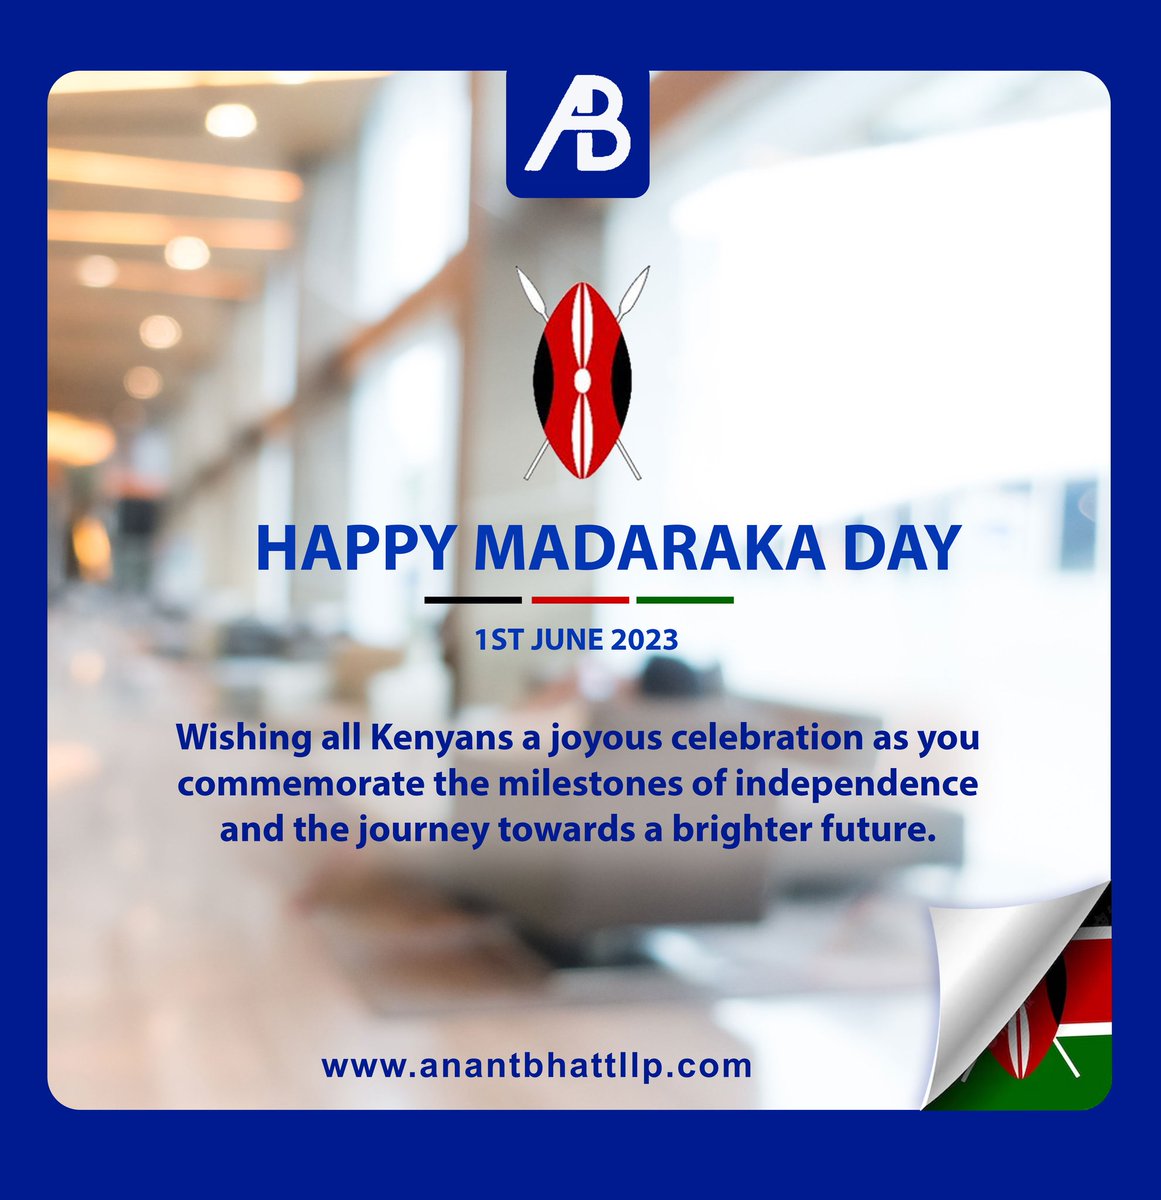 We wish all Kenyans a Happy 60th Madaraka Day.

#MadarakaDay 
#CorporateFinance #anantbhattllp #accounting #business #accountant #finance #tax #bookkeeping